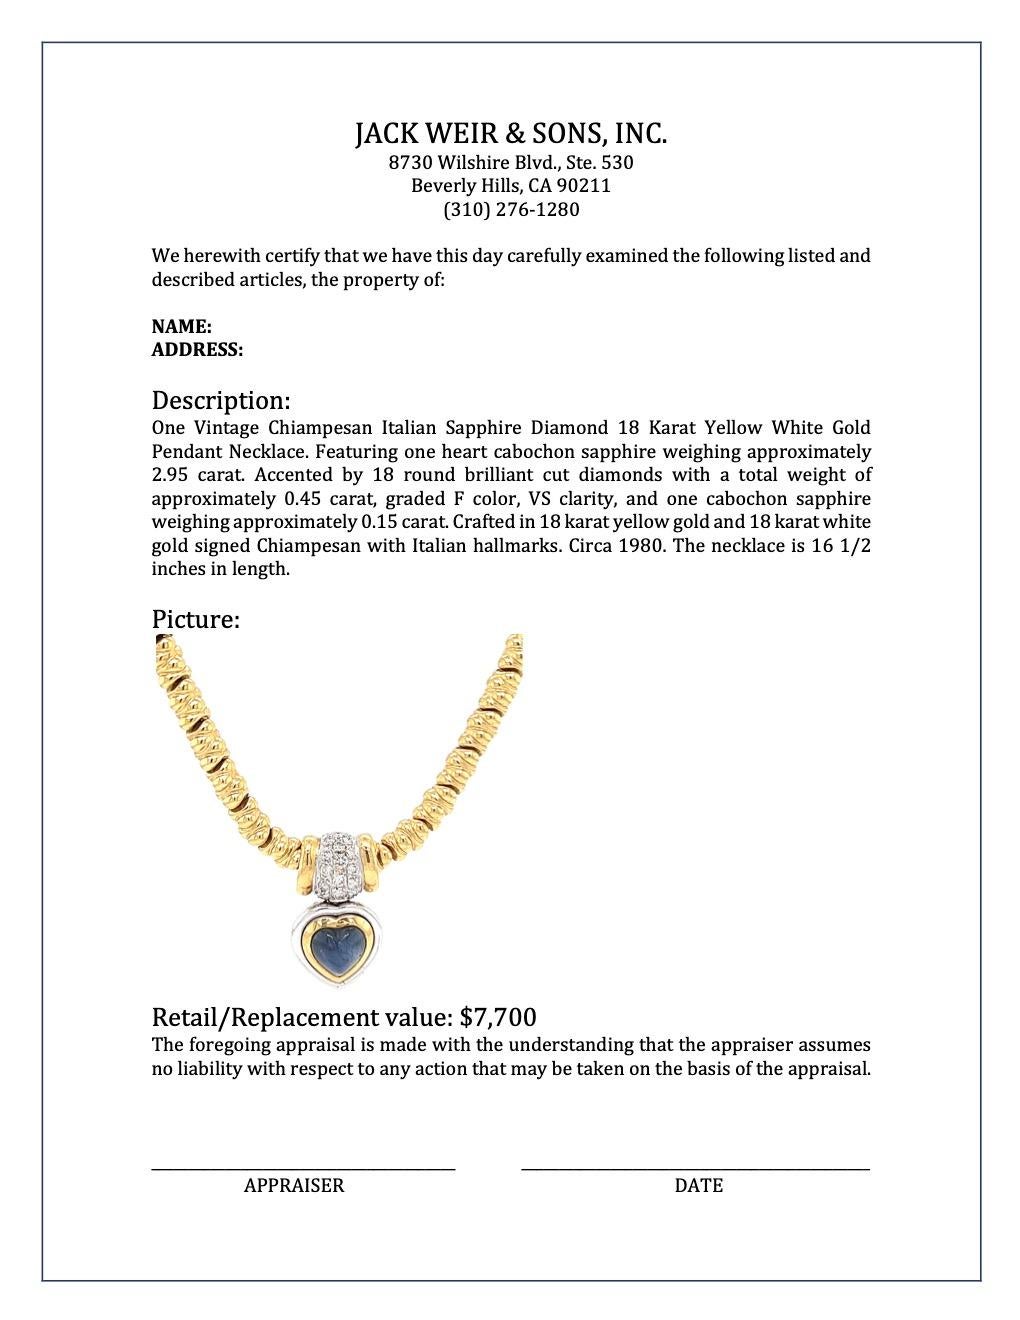 Vintage Chiampesan Italian Sapphire Diamond 18 Karat Yellow Gold Necklace 2